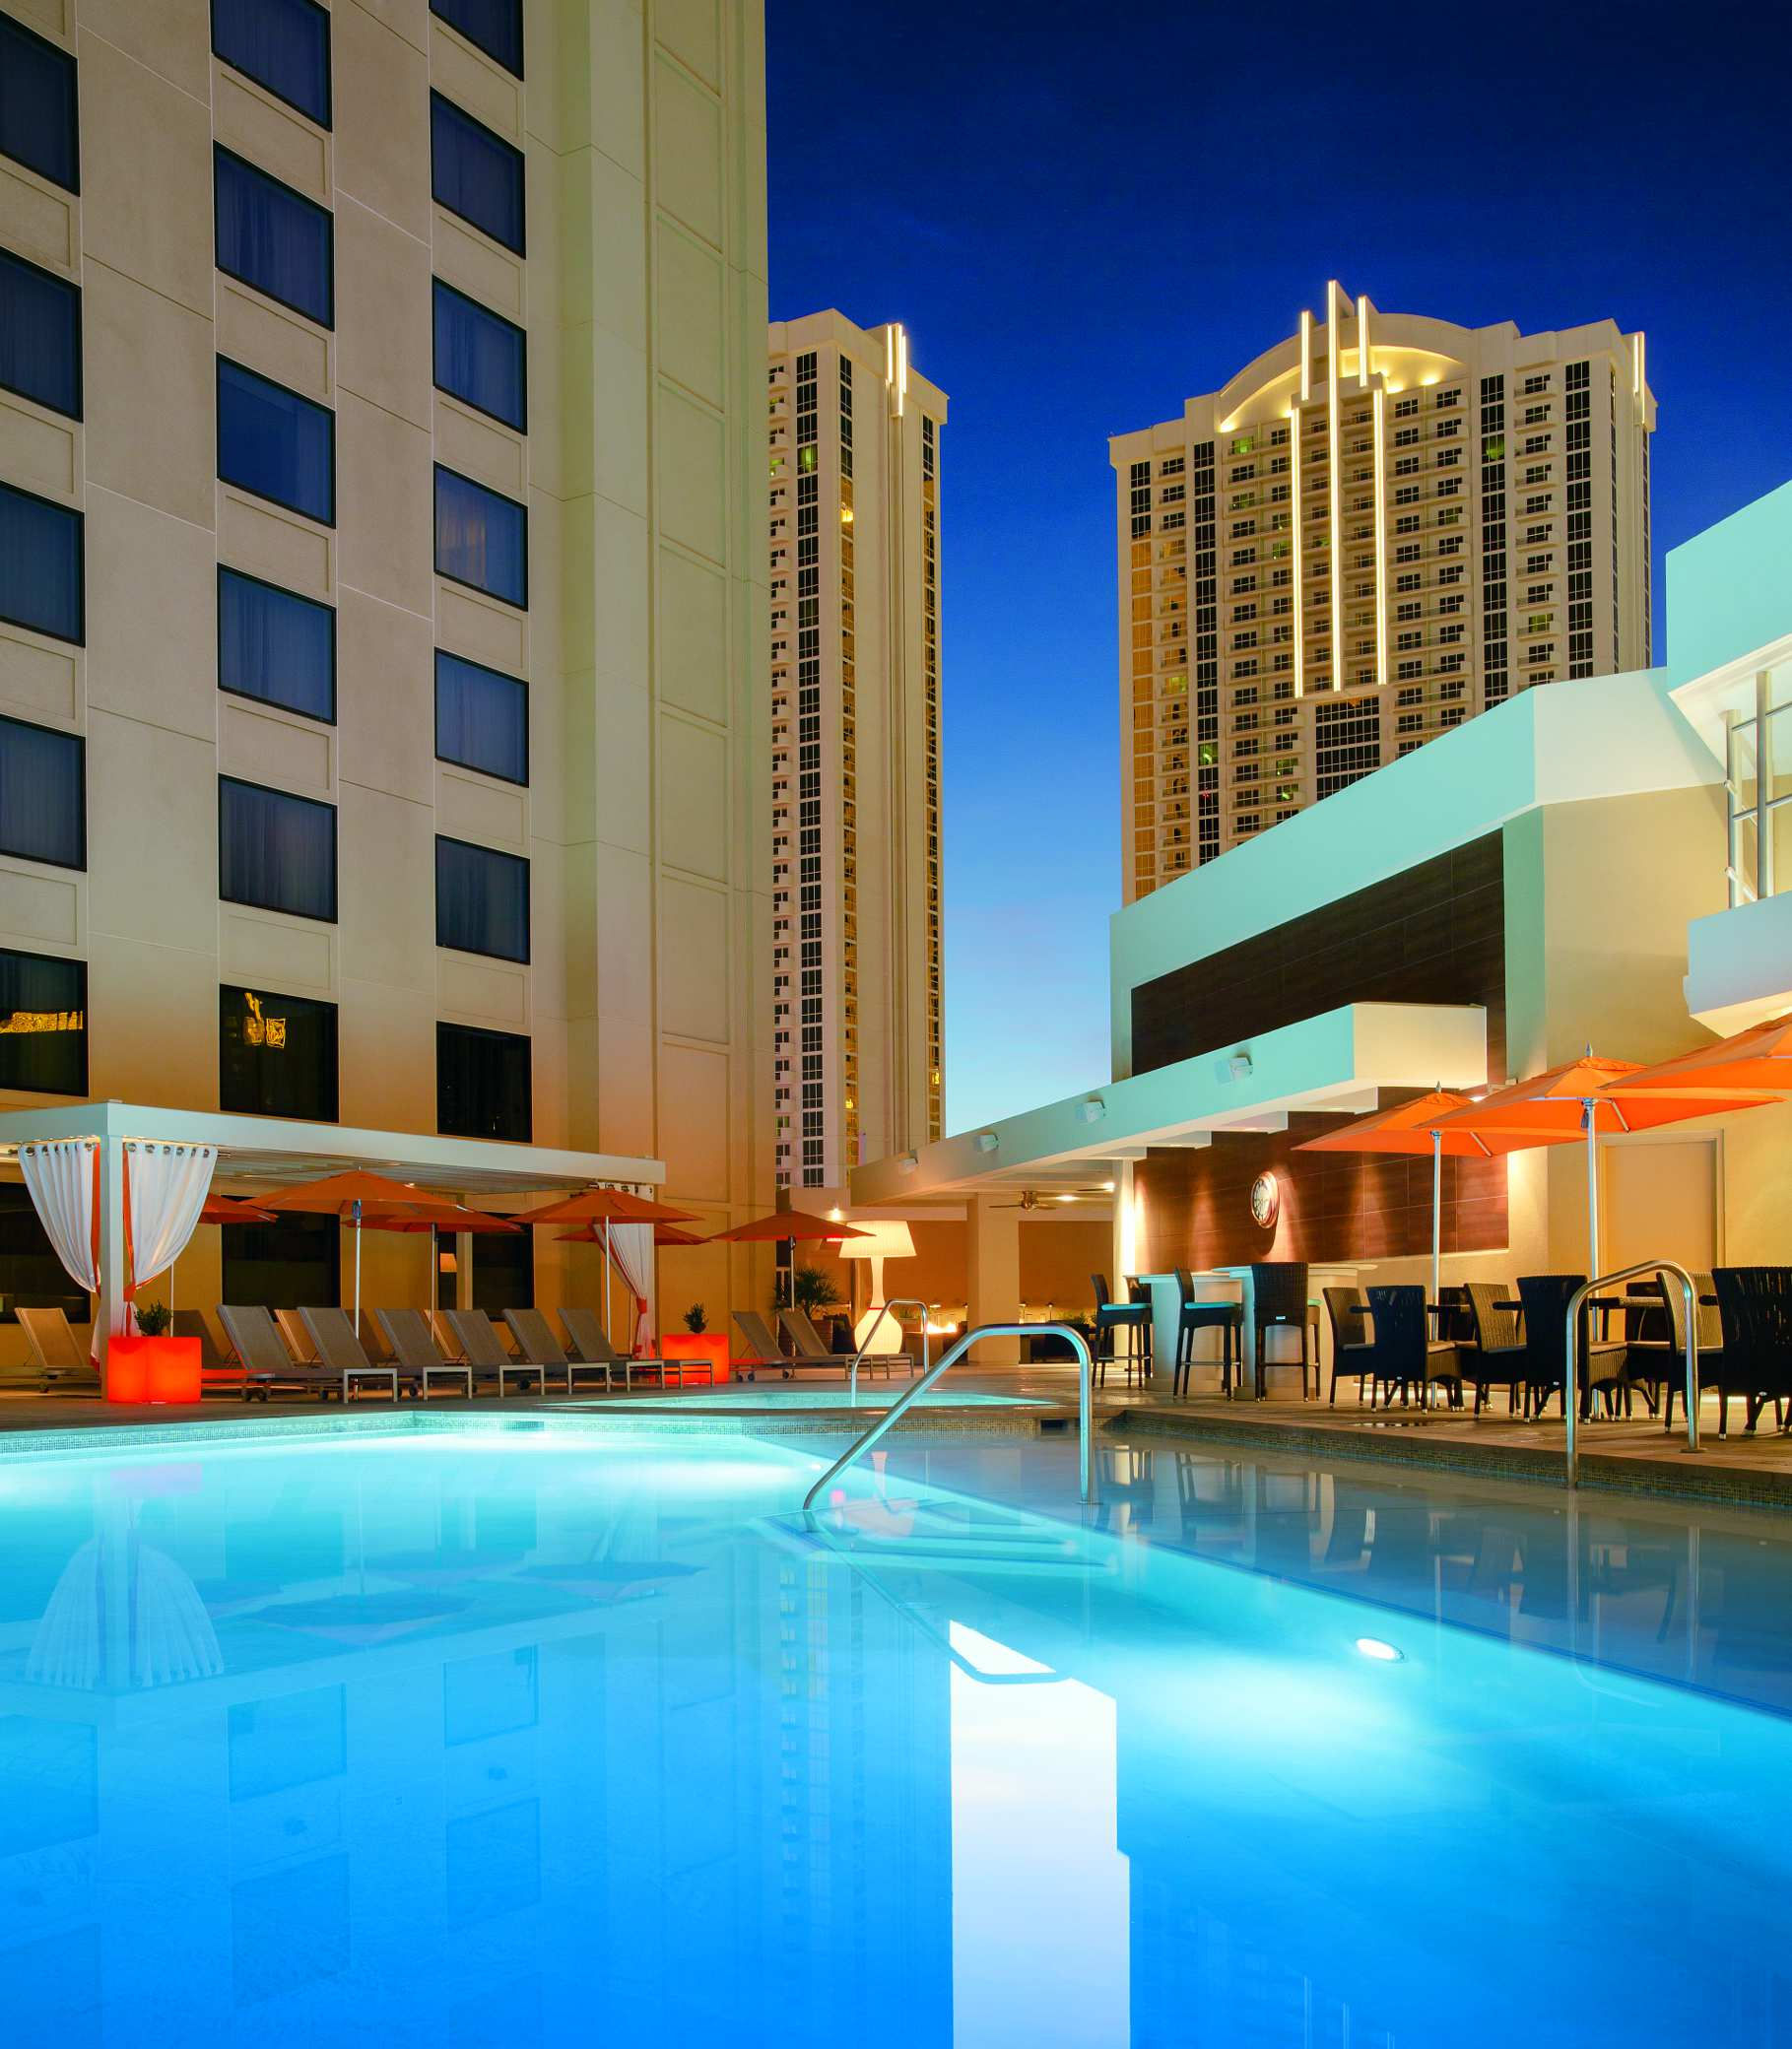 Marriott Grand Chateau in Las Vegas - Reviewed!